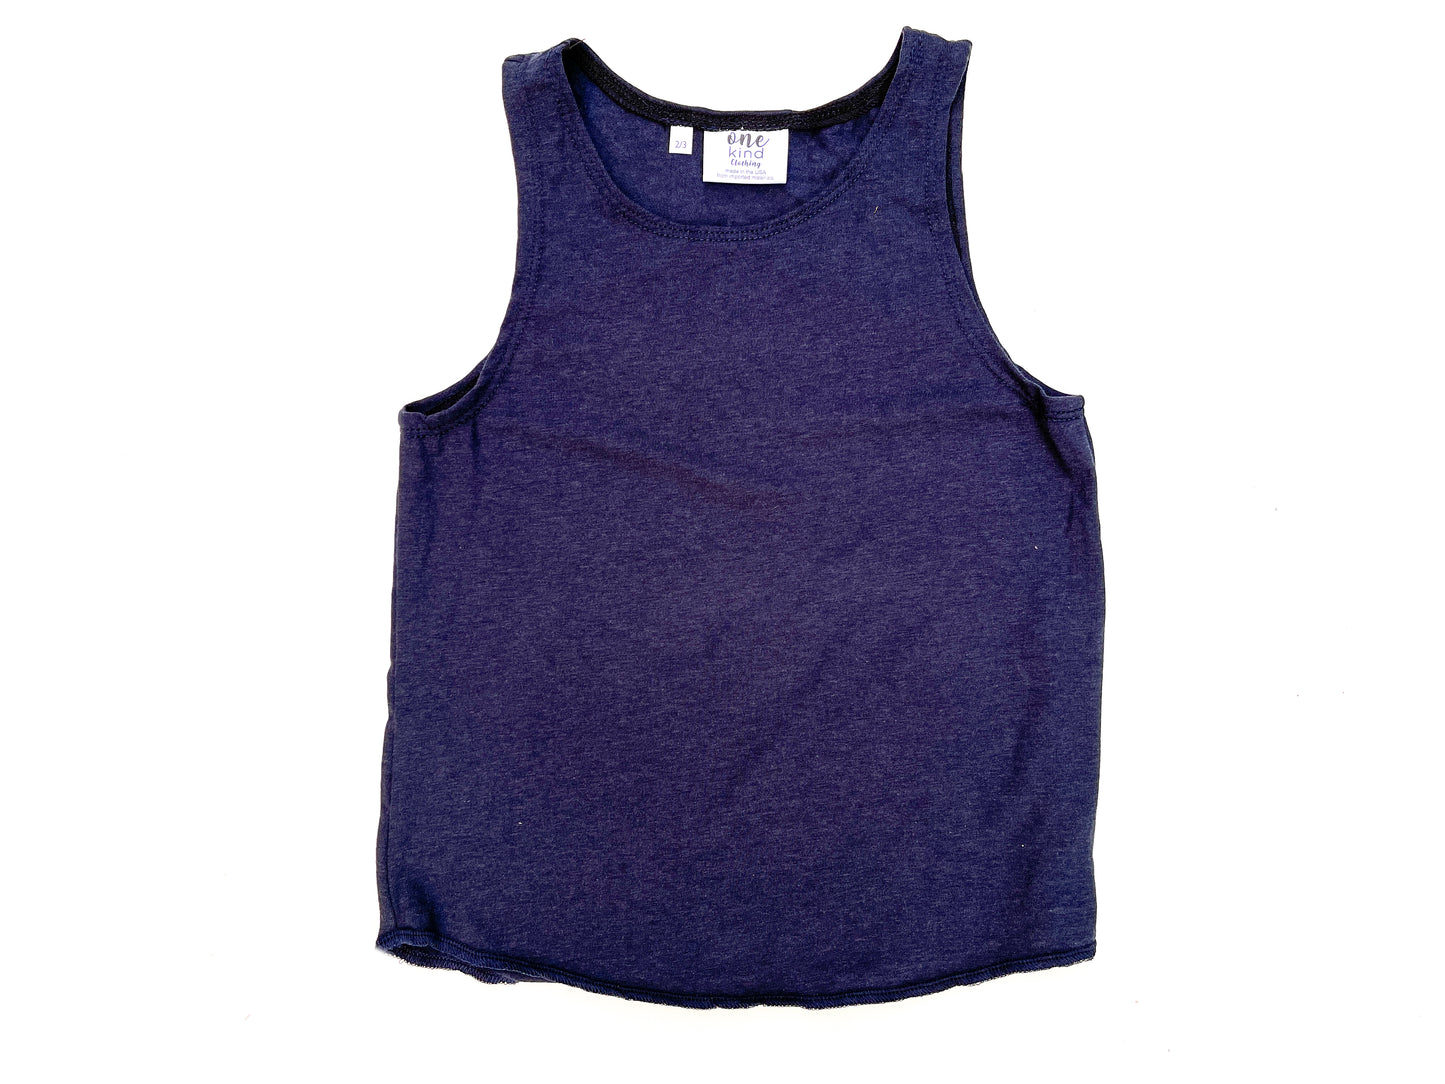 Slouchy Tank | Navy Blue - One Kind Clothing, LLC